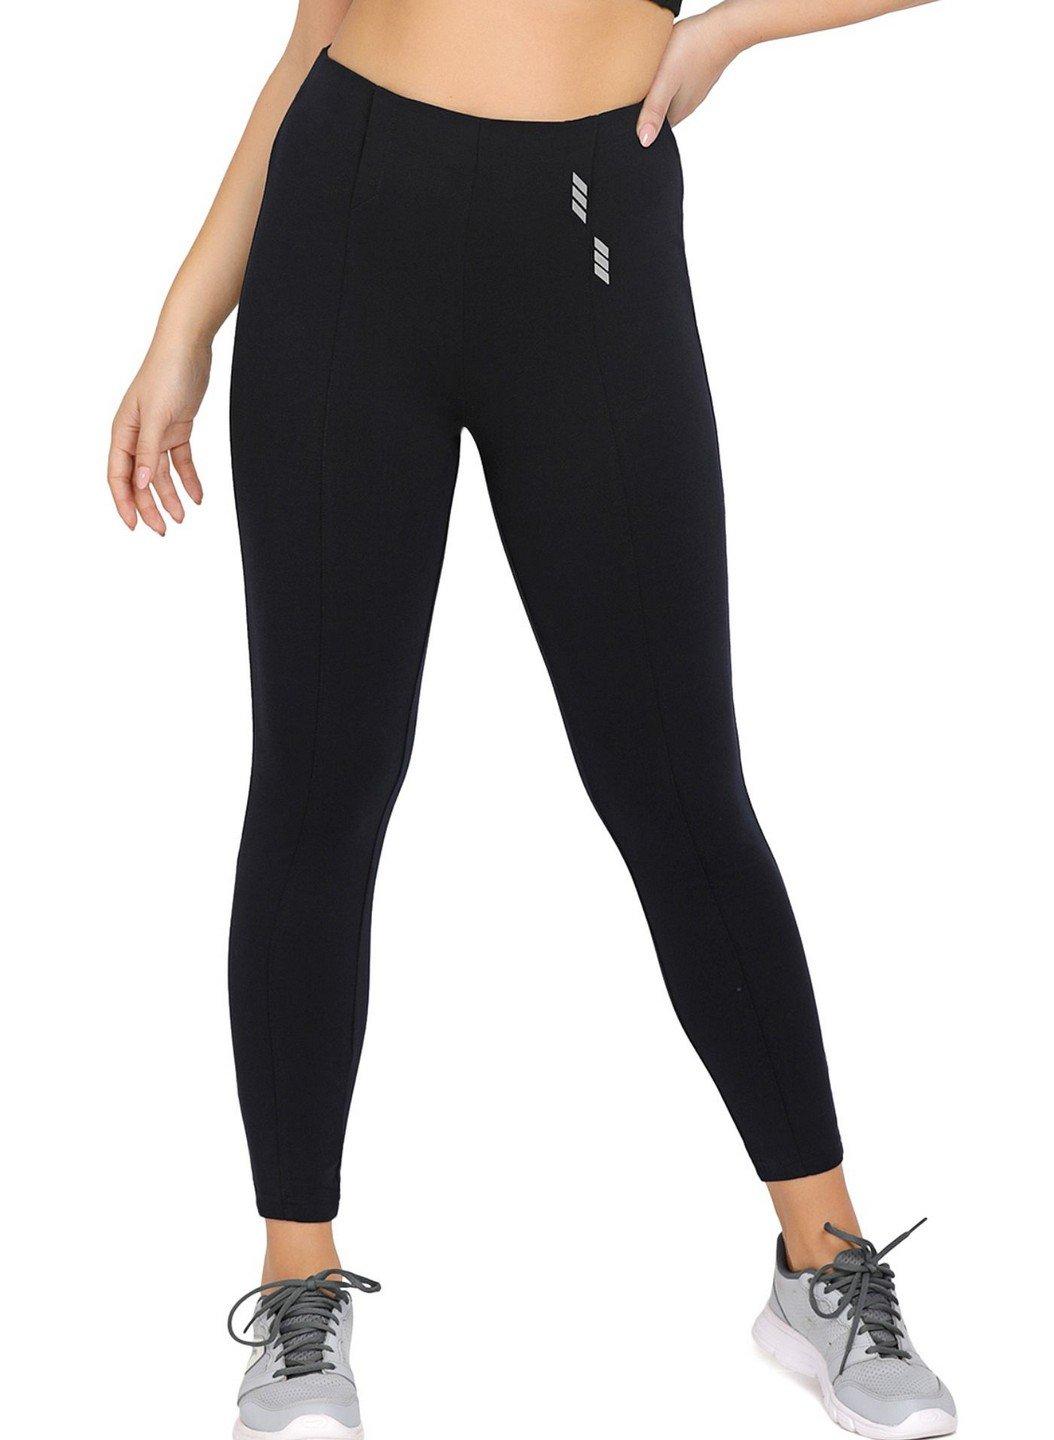 Lovable Black Cotton Ankle Length Tights Yoga Pants – Stilento